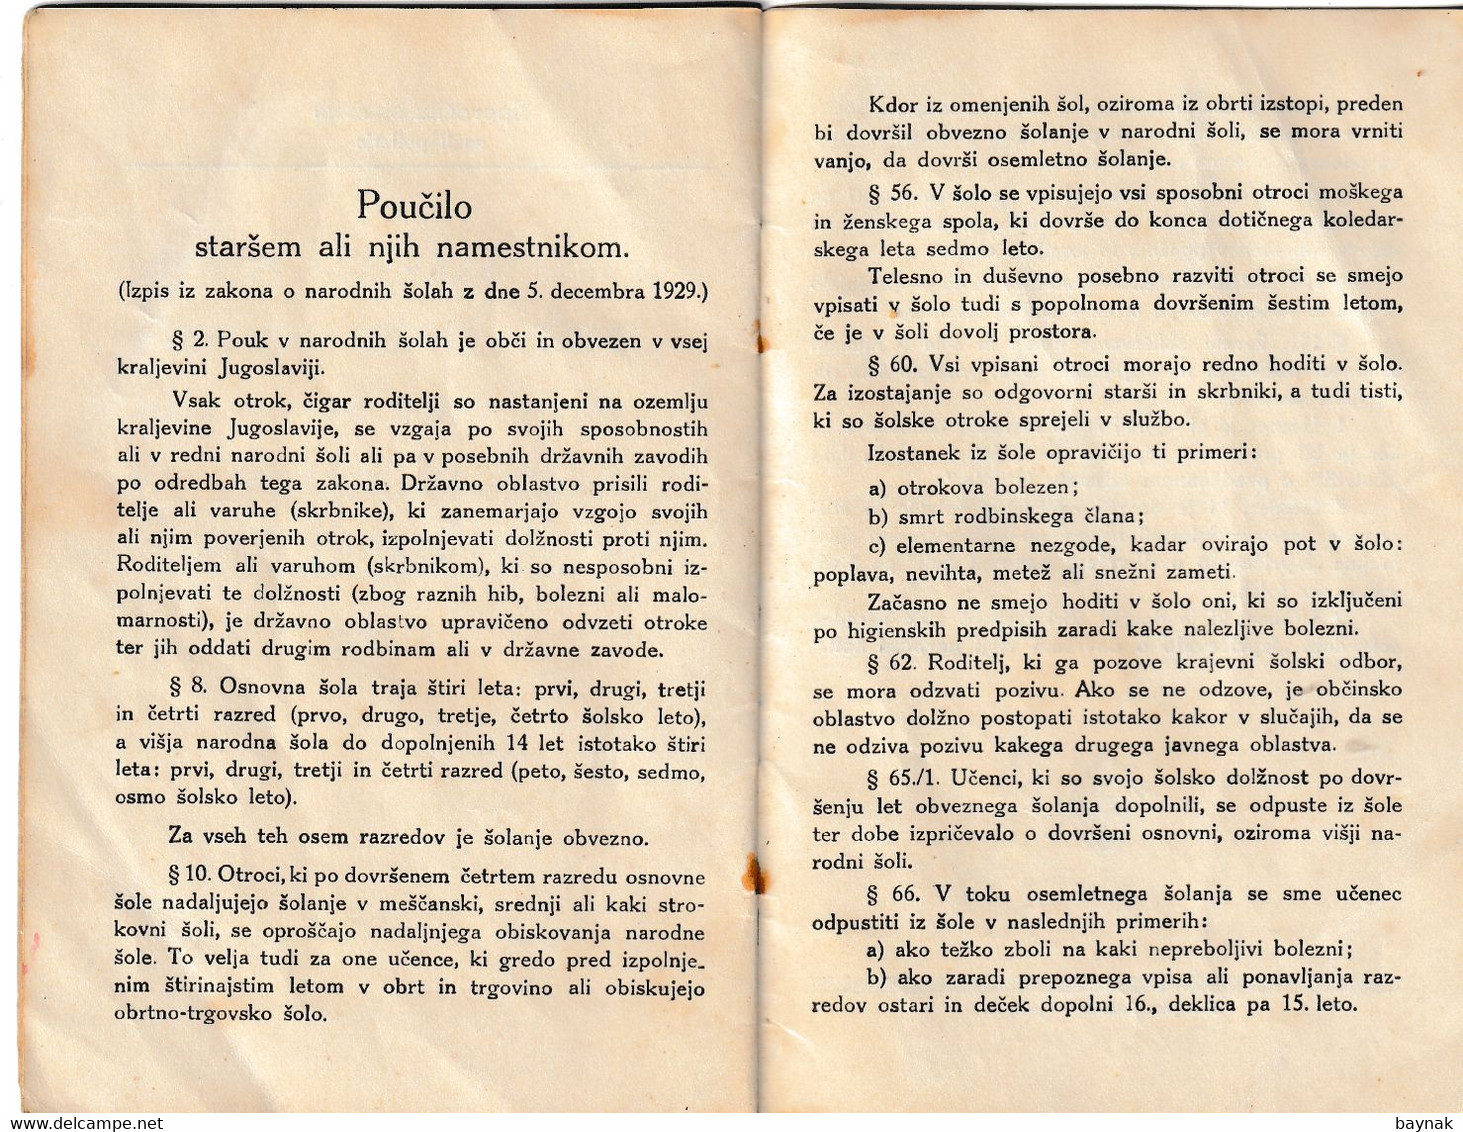 SLOVENIA  --  DRAVSKA BANOVINA   -  KNJIZICA ZA UCENCE KE NARODNIH SOL  - SP. POLSKAVA, POKOSE  -  1935  - SCHOOL REPORT